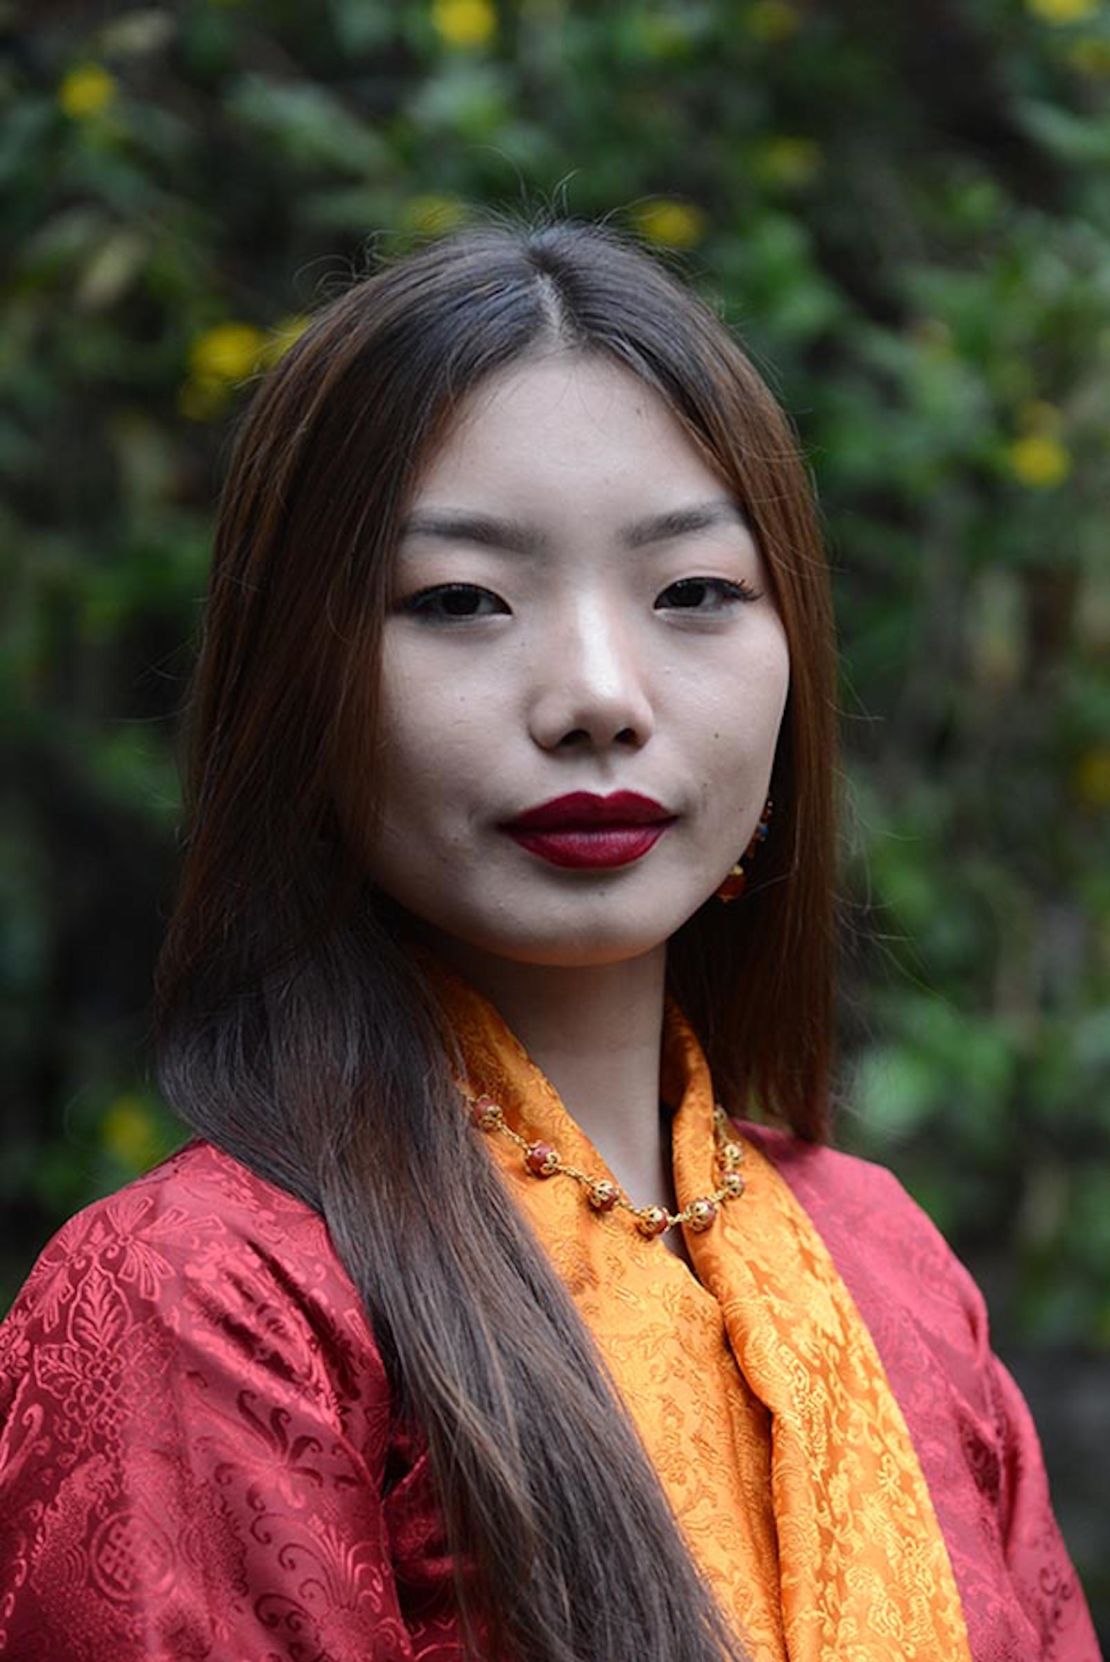 Tenzin Paldon, the winner of Miss Tibet 2017.